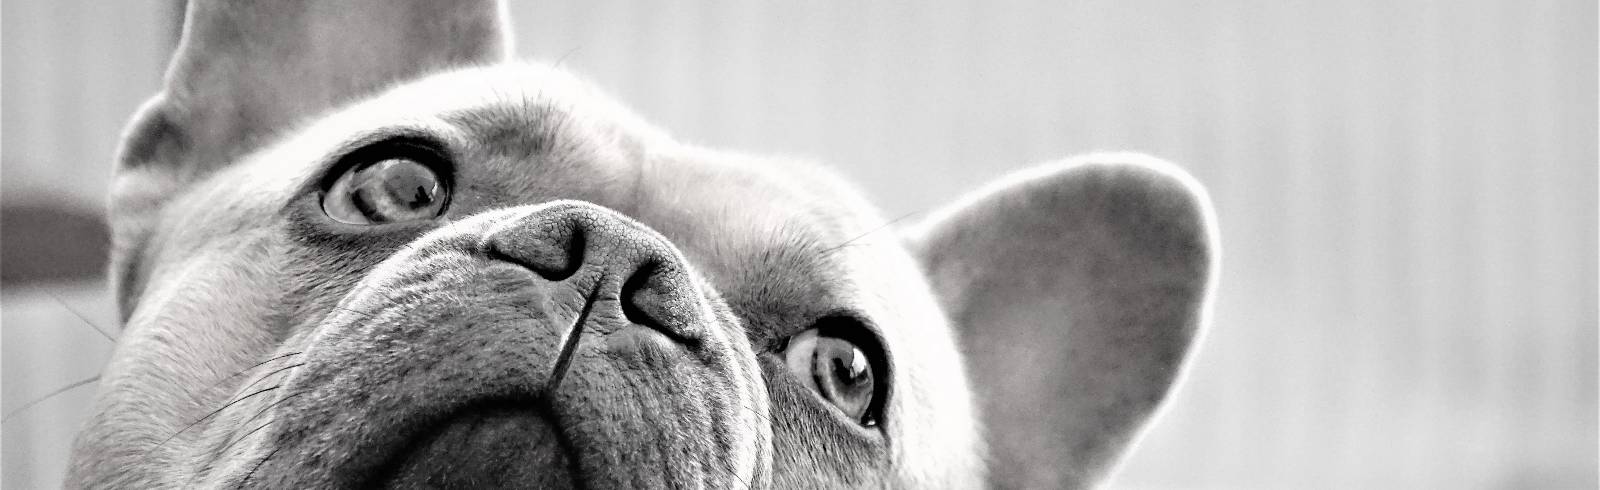 Tote Bulldogge: Trauer nach Balkon-Wurf